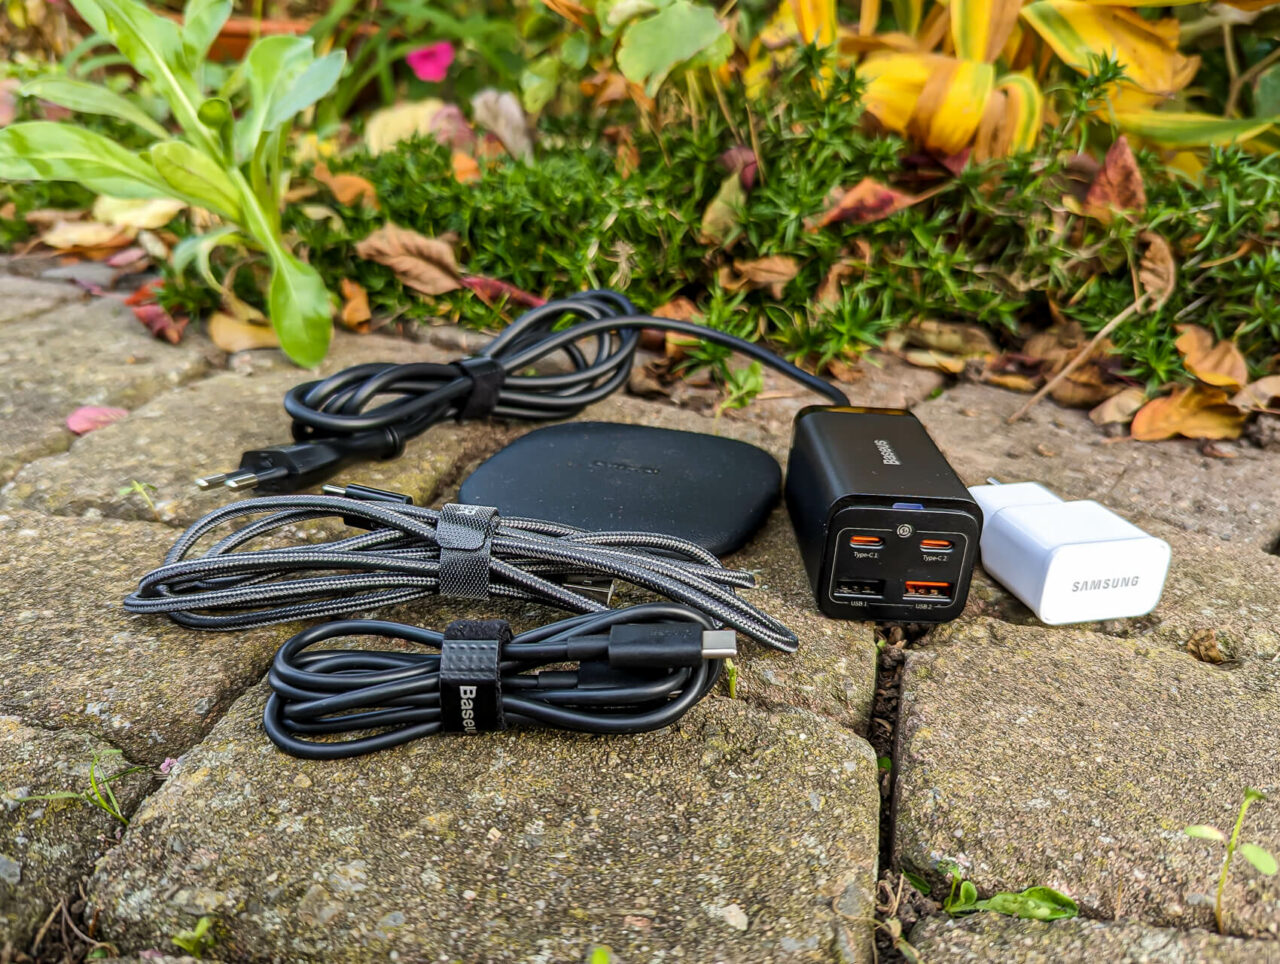 Zubehör, Powerbank, Ladegerät, USB-Kabel, Qi Charger